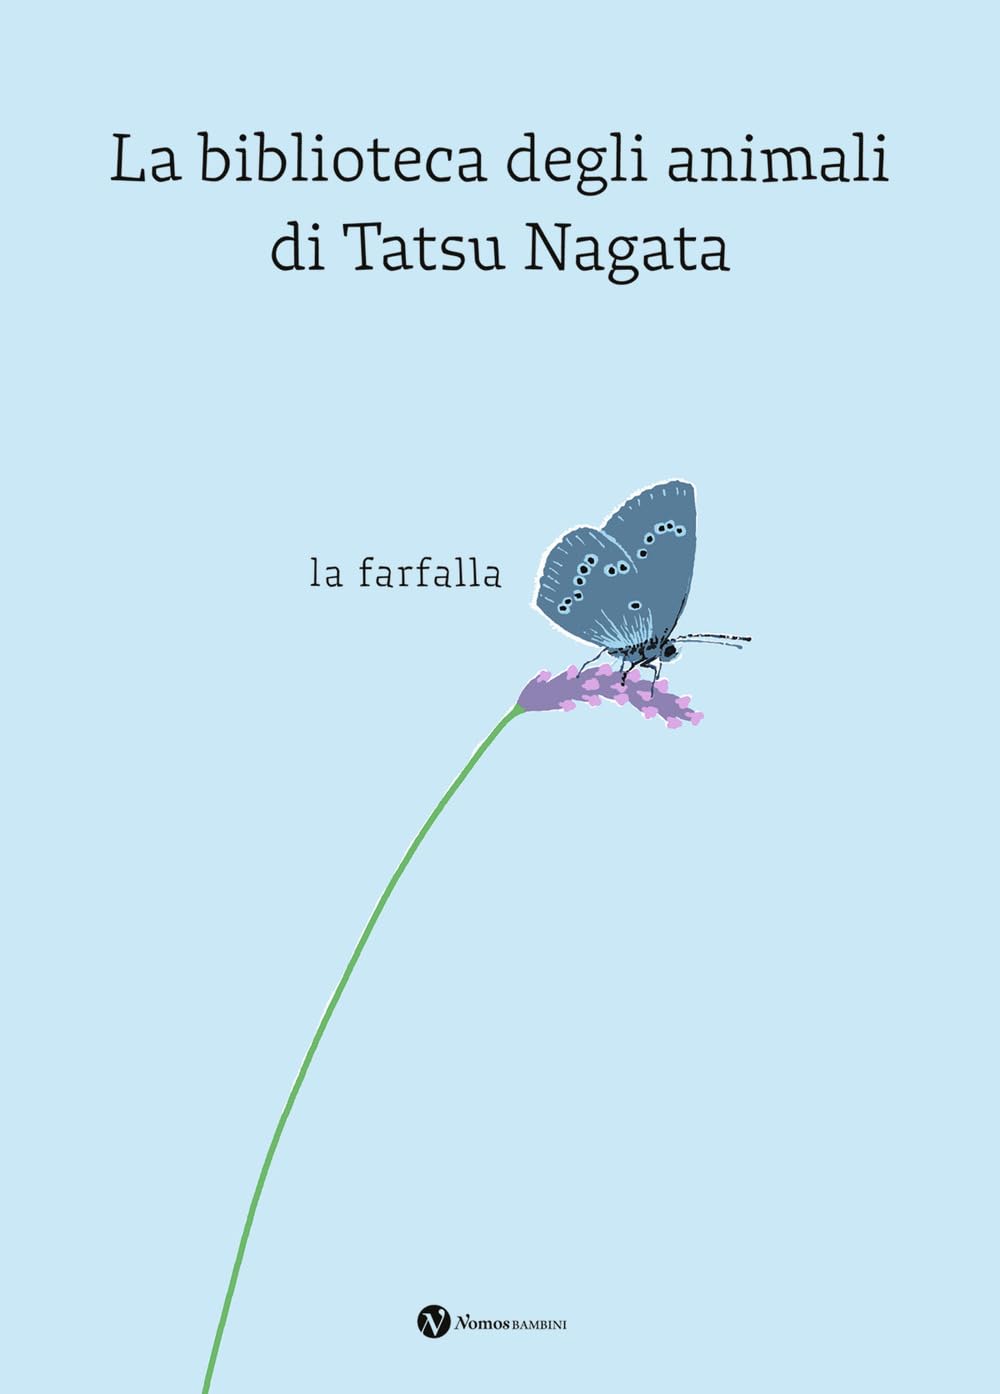 La biblioteca degli animali di Tatsu Nagata - La farfalla